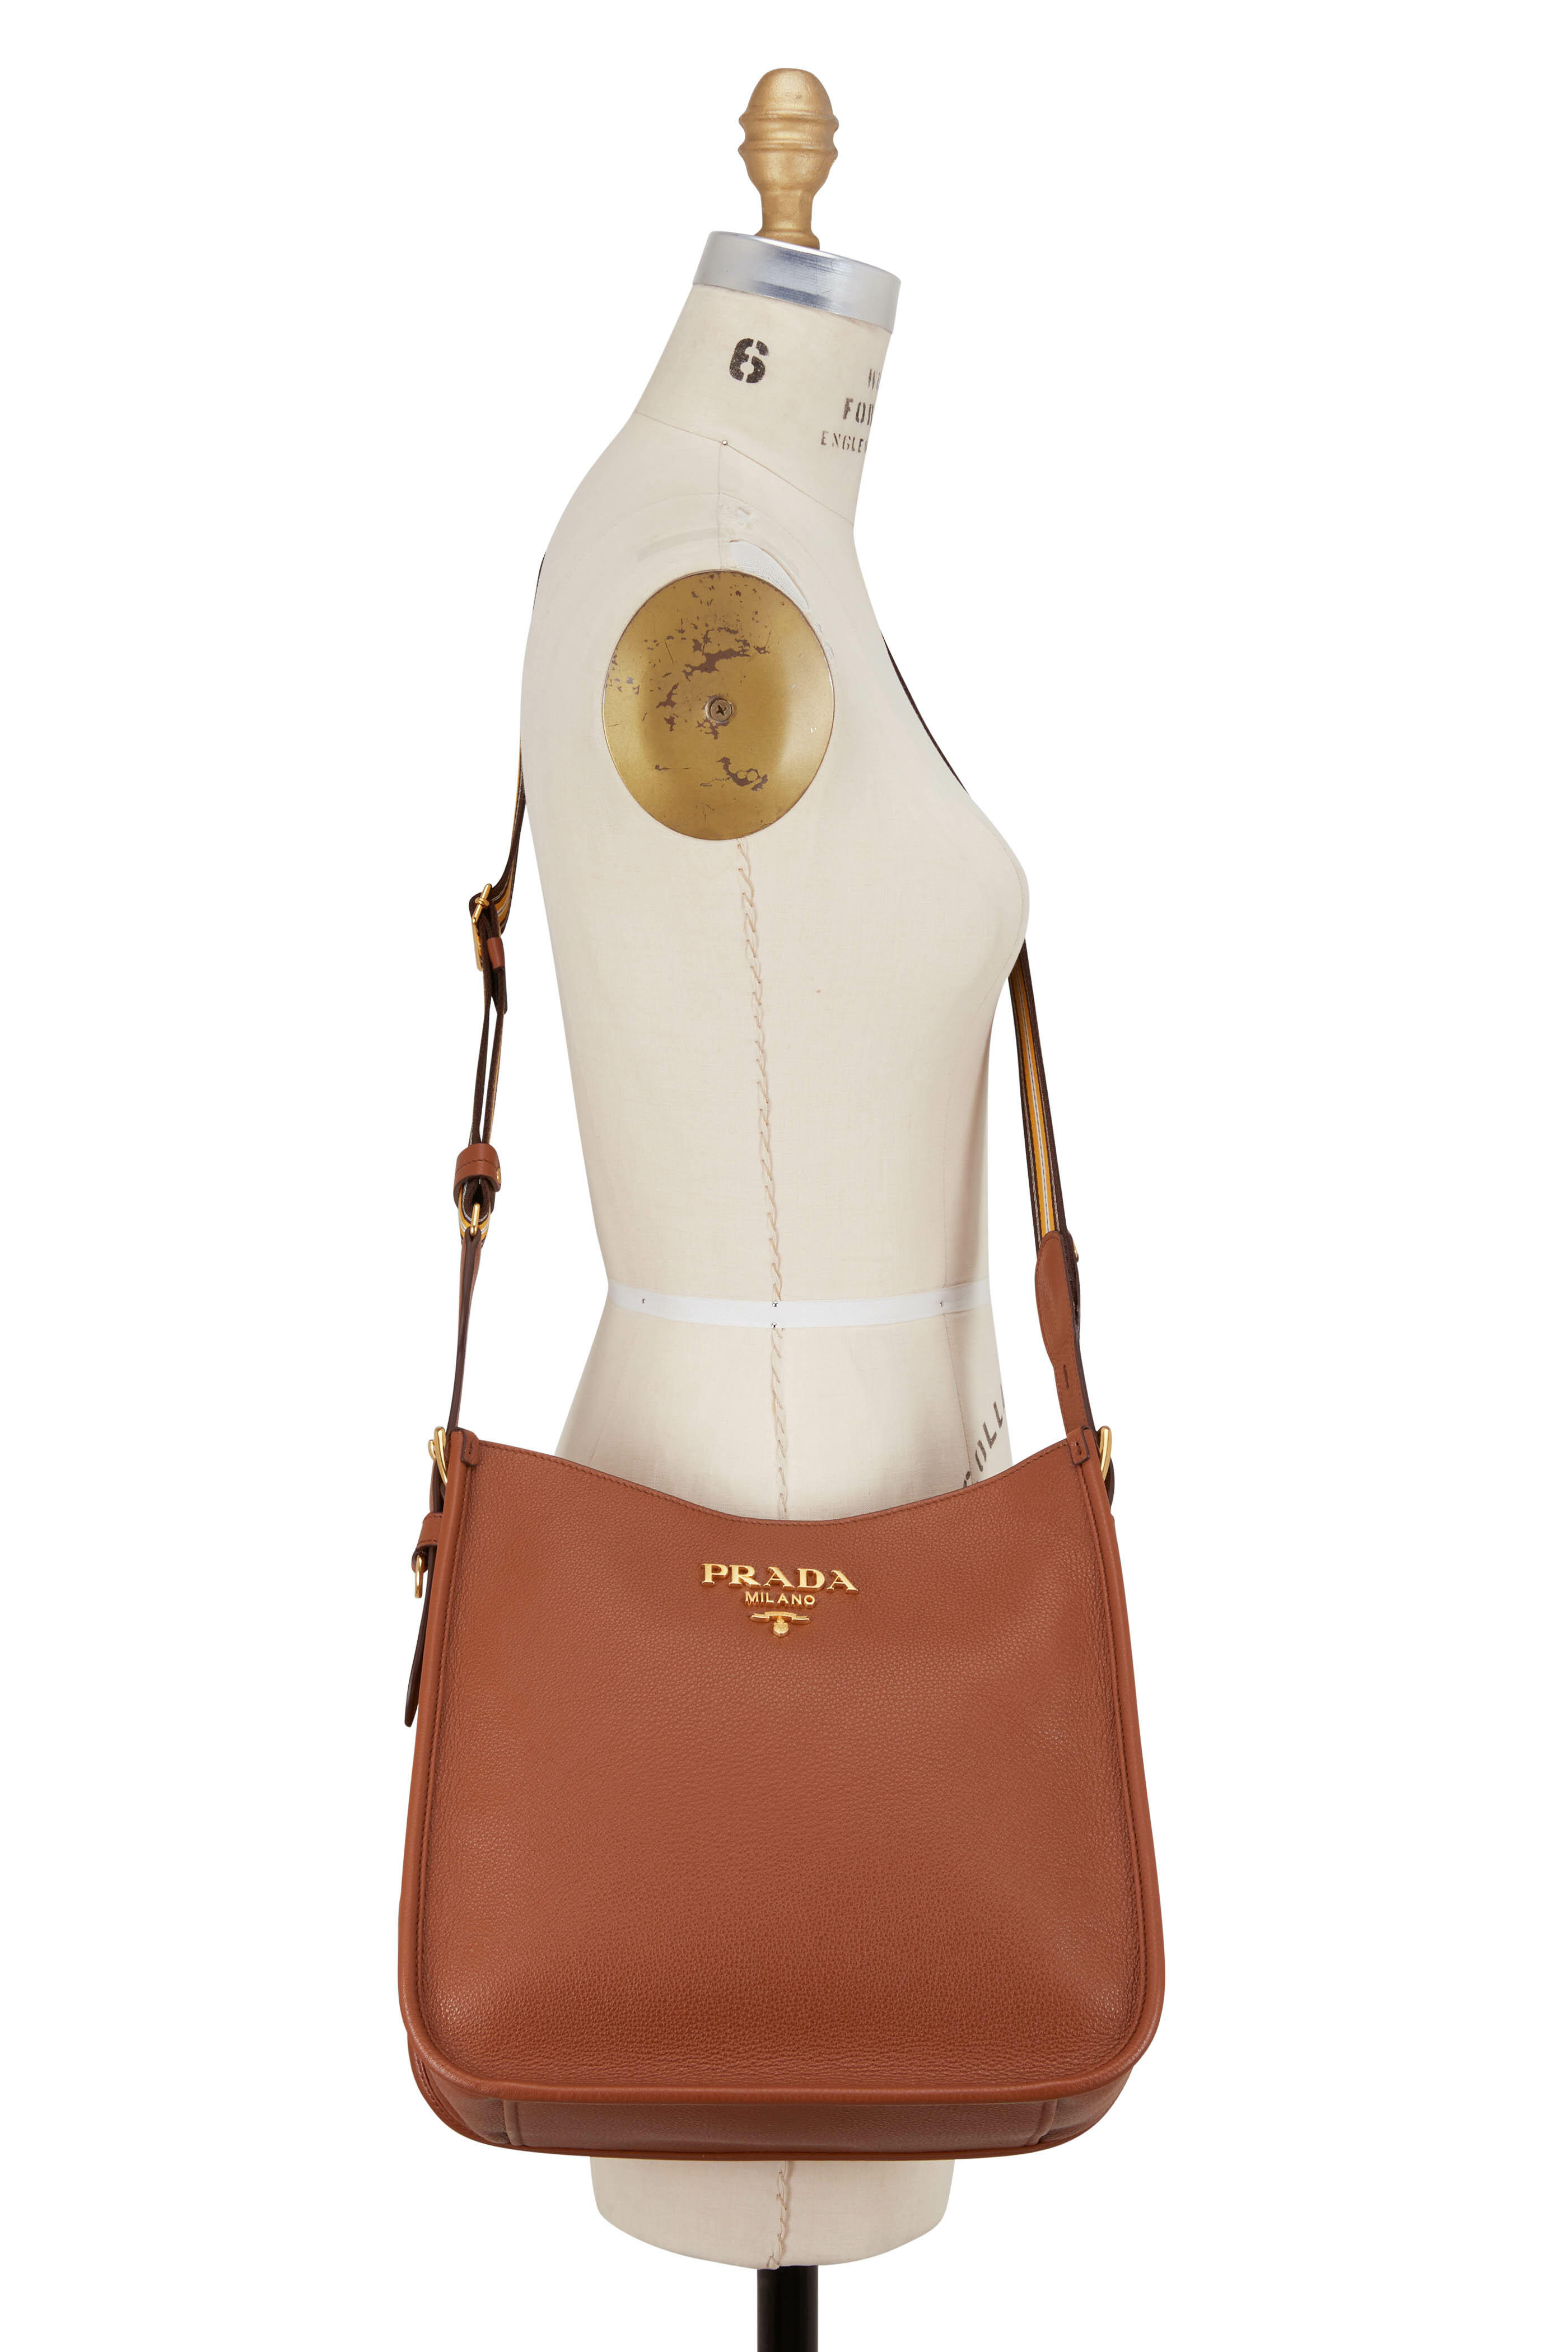 Prada Daino Leather Top Handle Hobo Bag